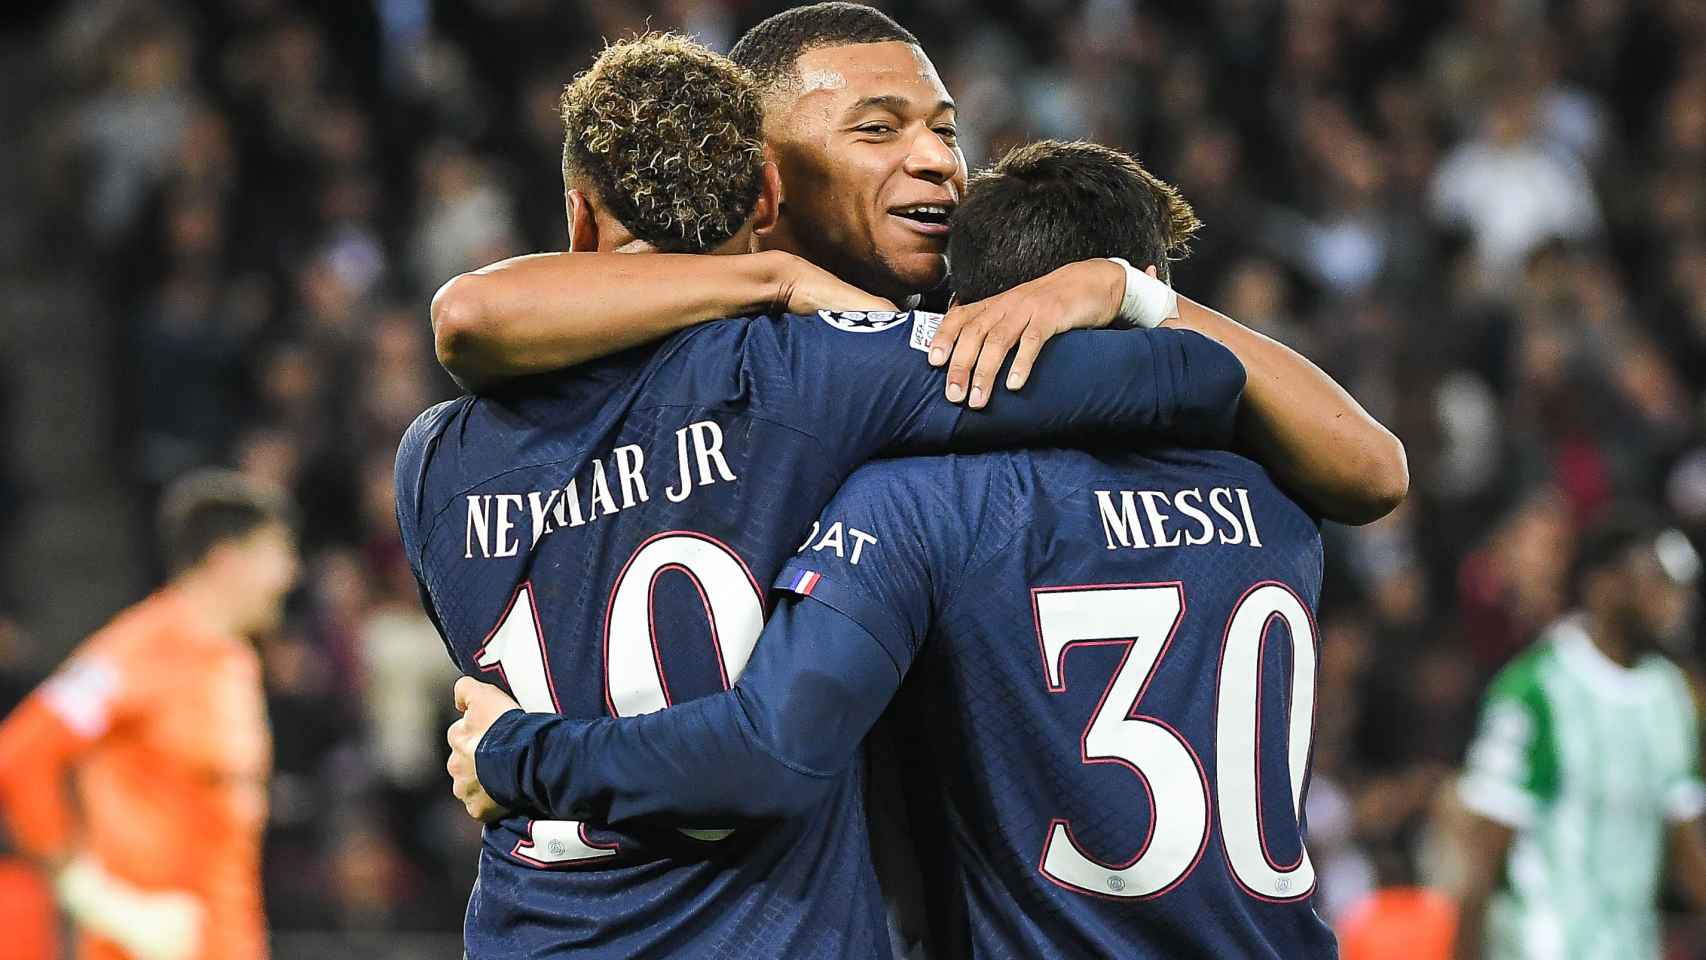 Abrazo entre los jugadores del PSG Mbappé, Messi y Neymar (MMN)